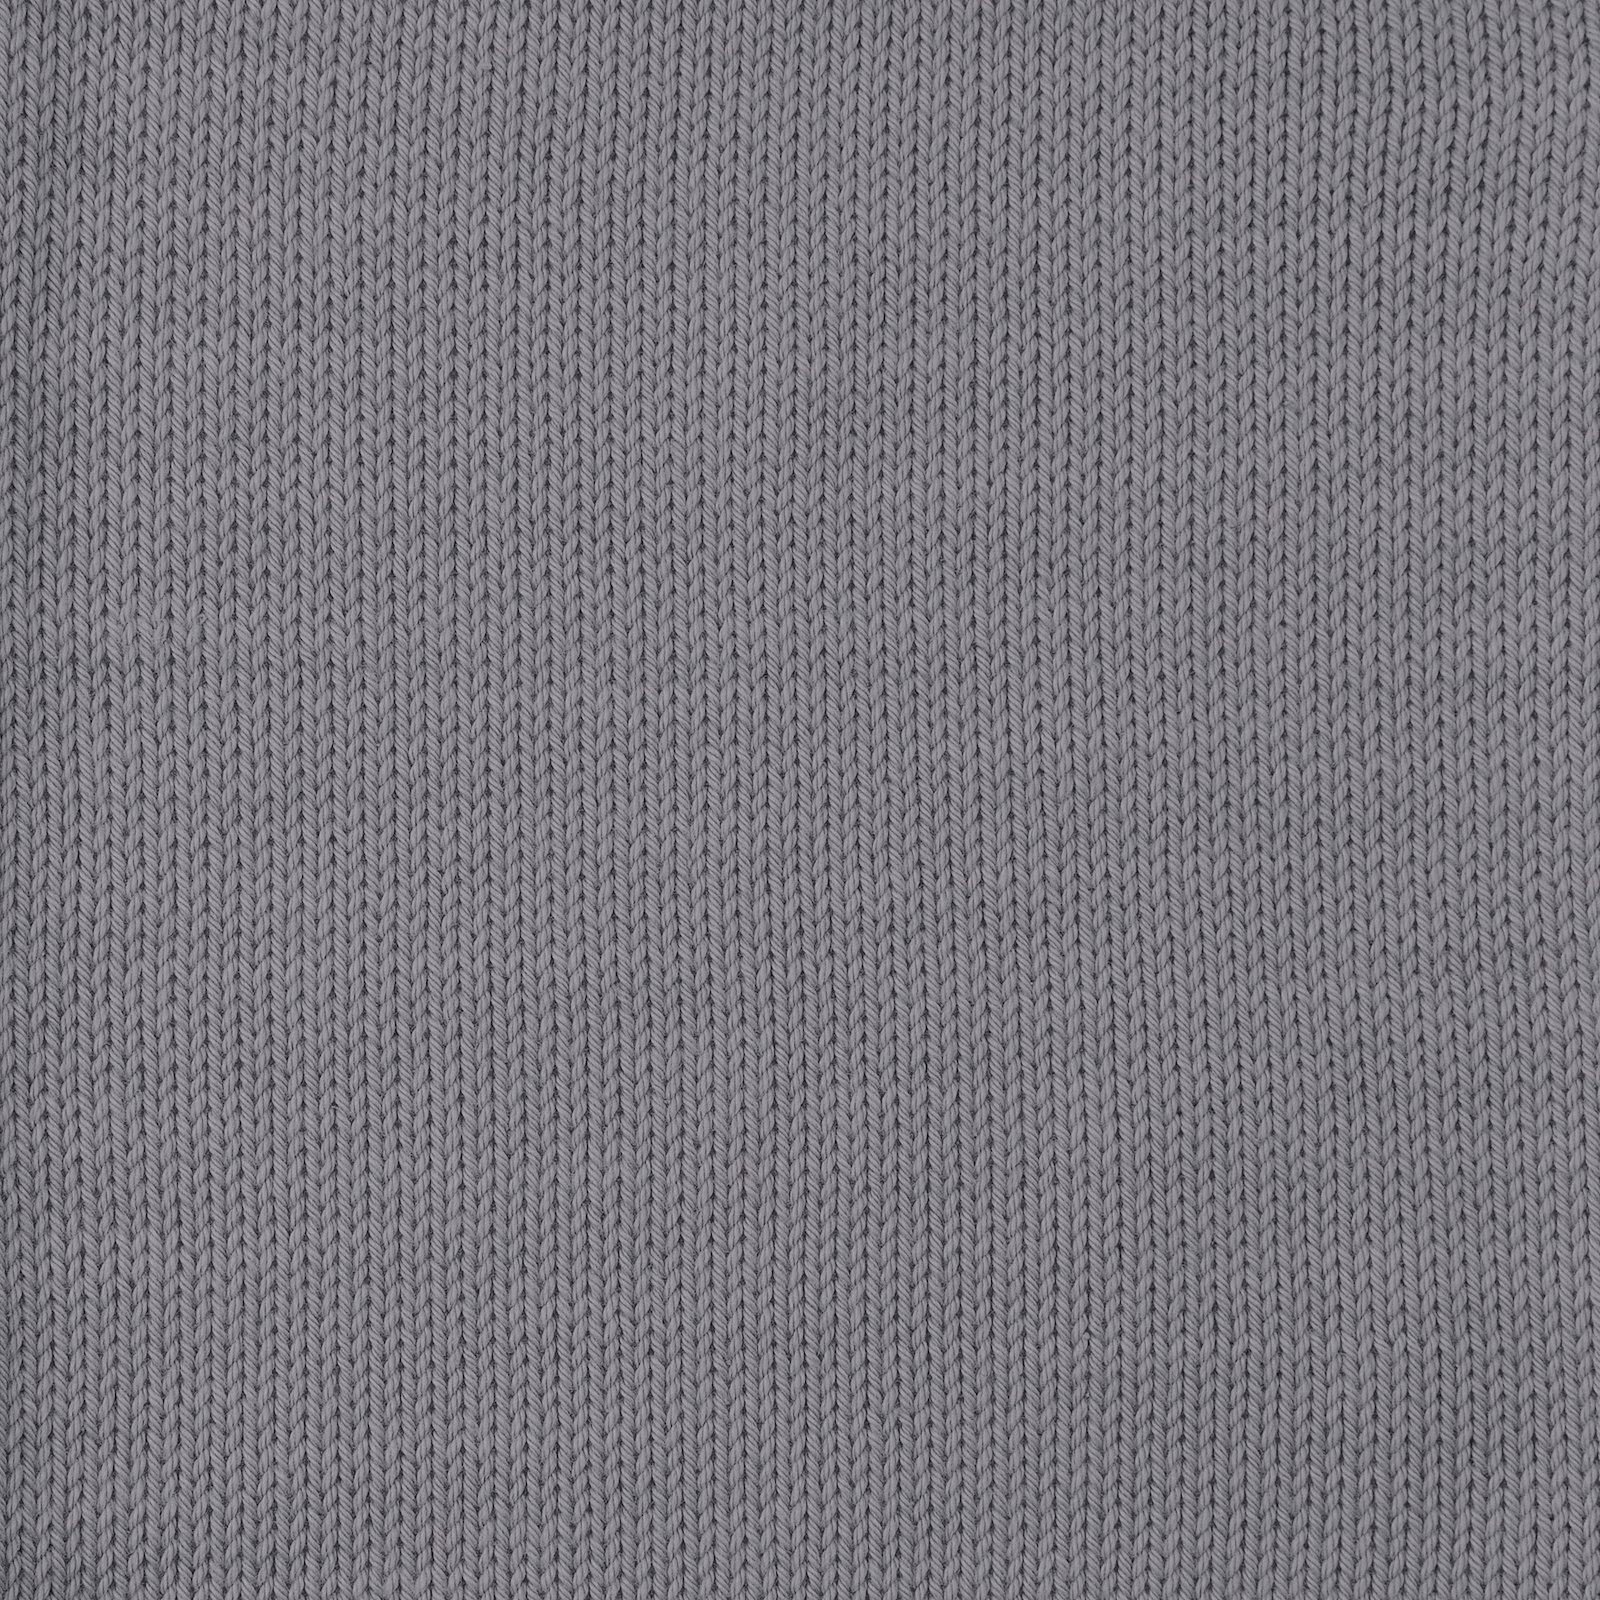 FRAYA, 100% cotton yarn "Colourful", grey/blue 90060041_sskit